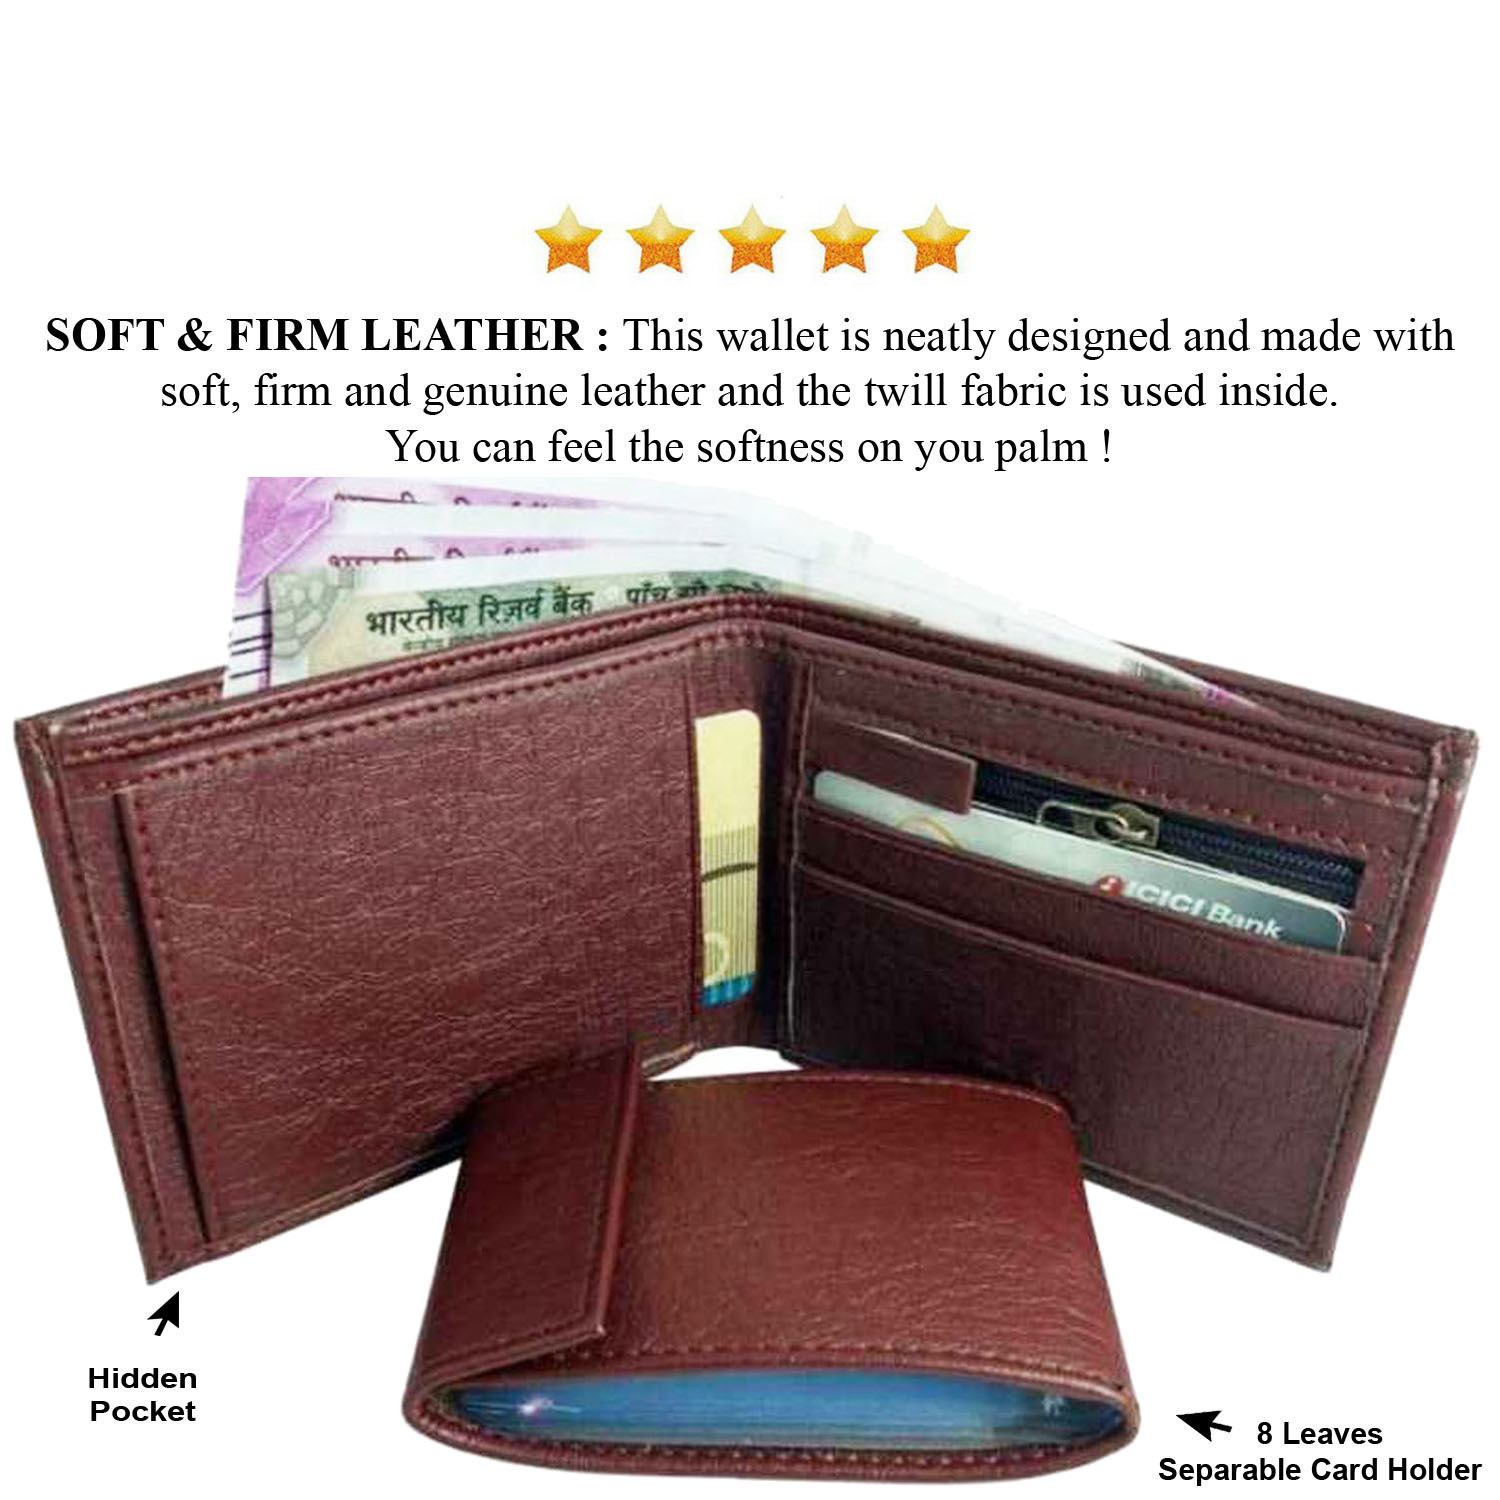 Mens Wallet PU Leather Brown Bi-Fold Gents Purse